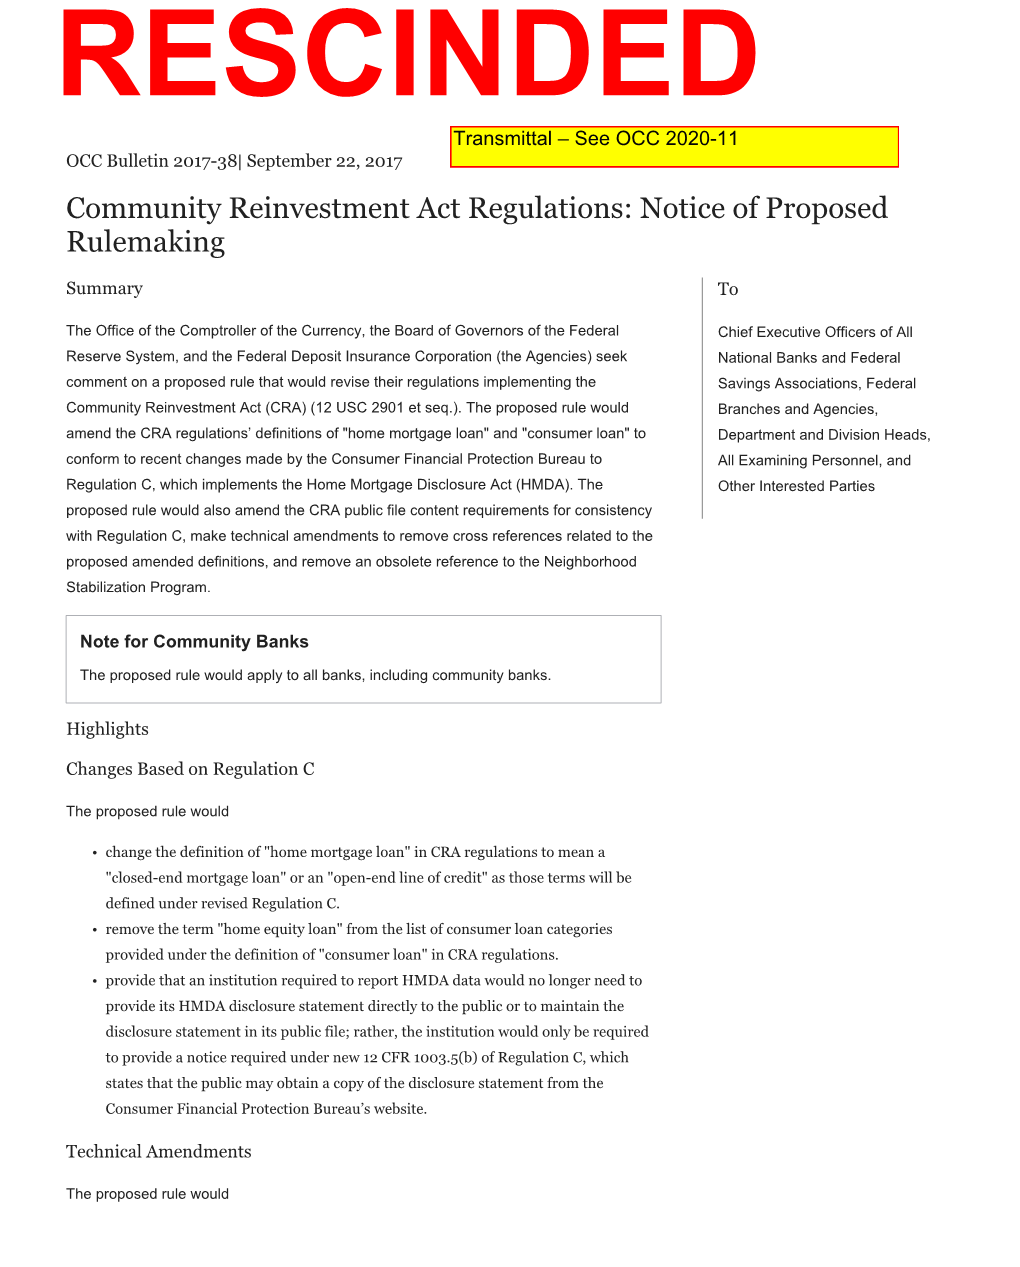 Community Reinvestment Act Regulations